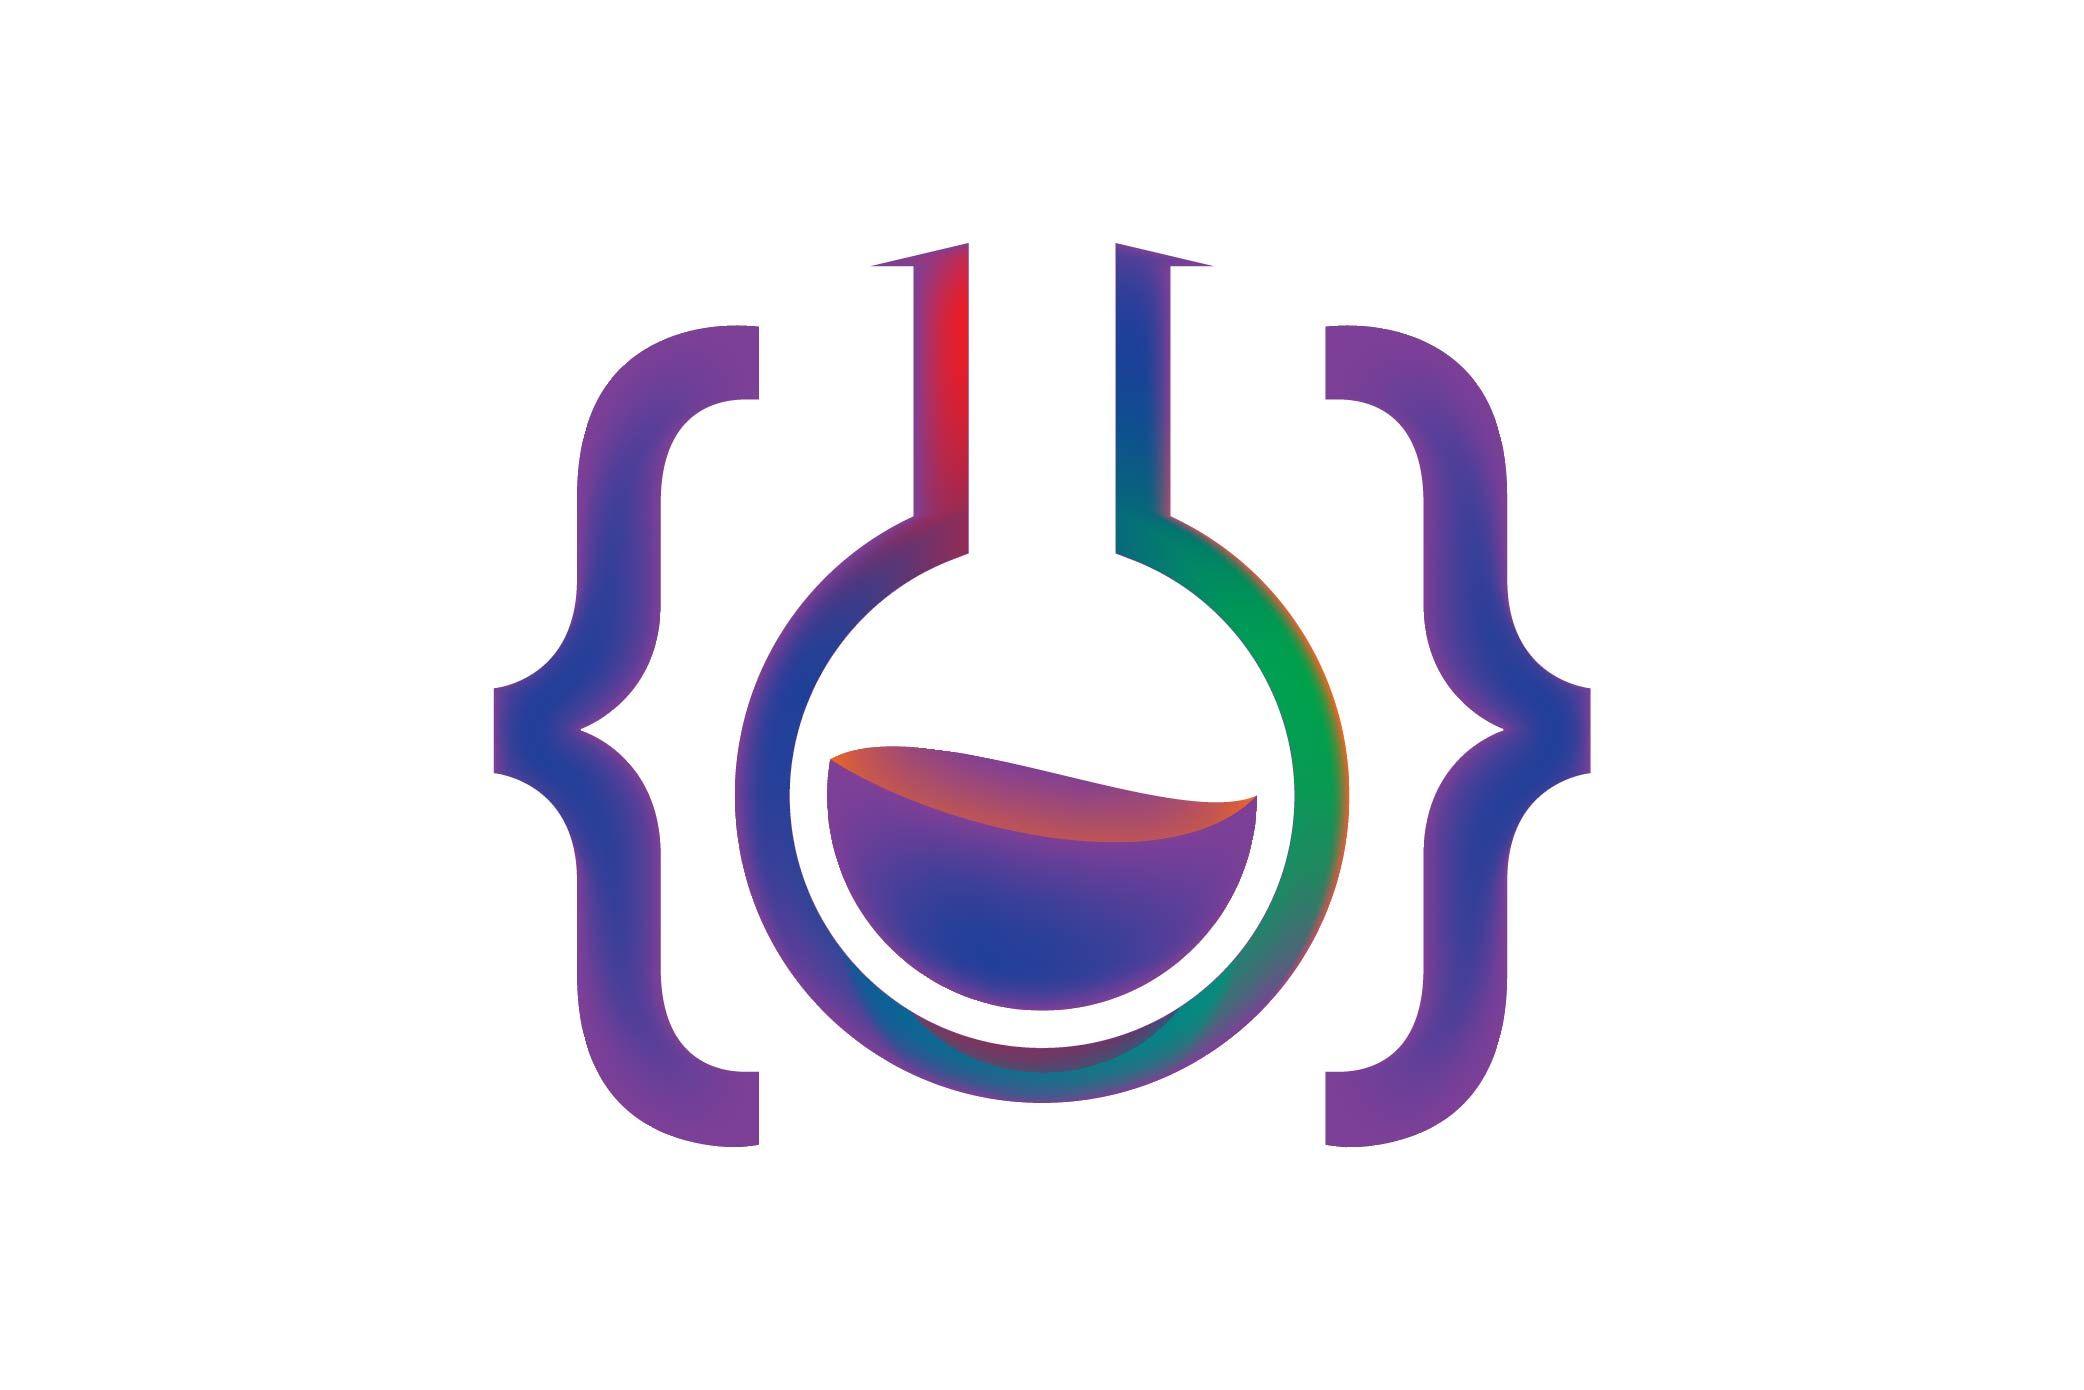 Lab Logo - code lab logo design inspiration